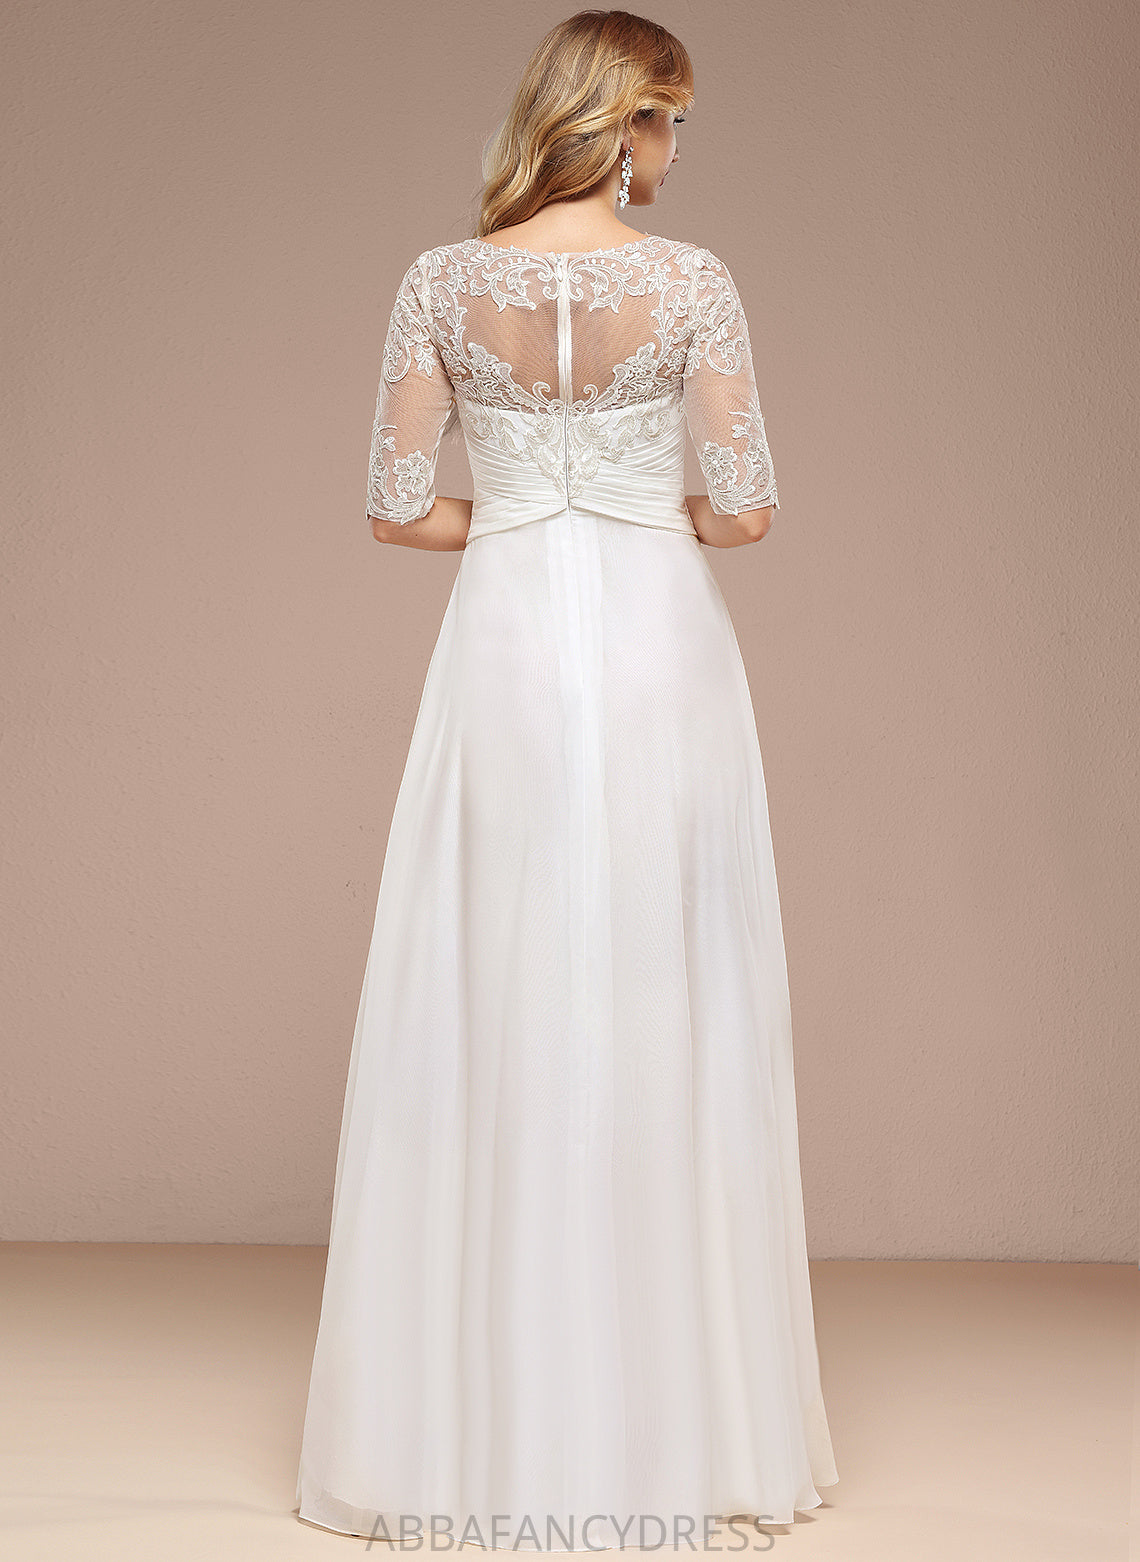 A-Line Dress Chiffon Lace Wedding Wedding Dresses Neck Boat Aleah Asymmetrical